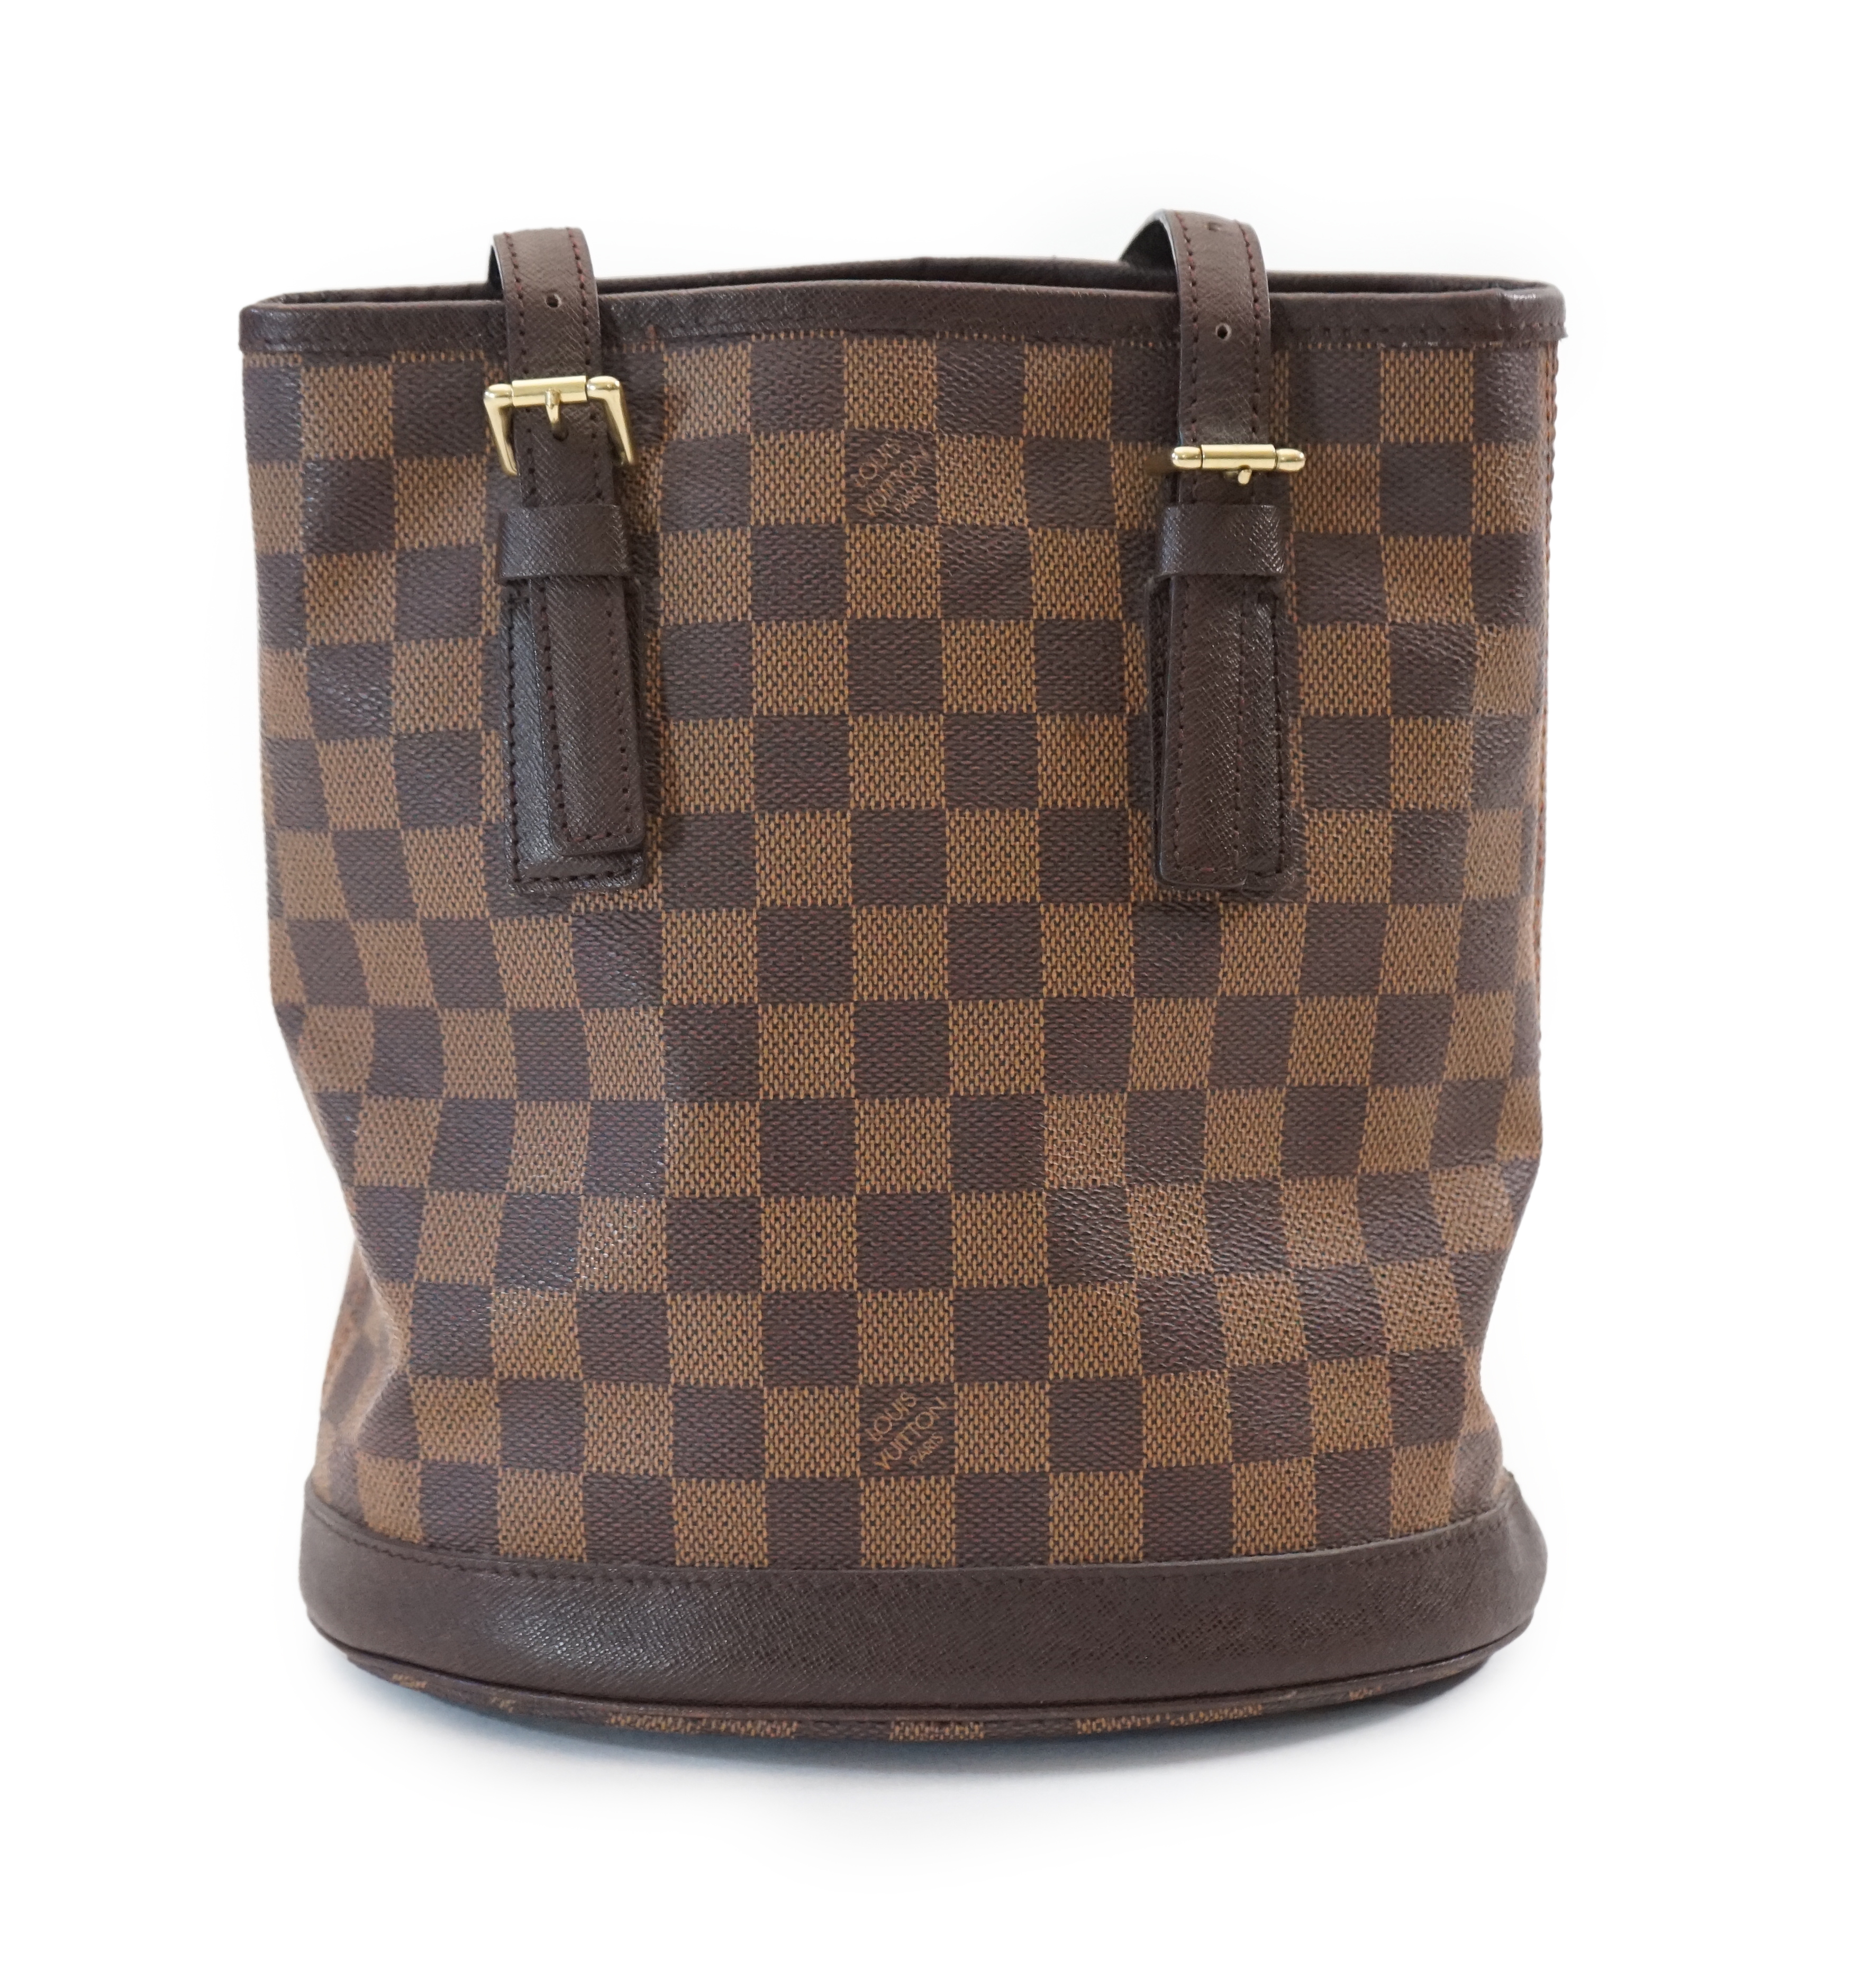 A Louis Vuitton Damier Ebene Marais bucket bag, width 23cm, depth 16cm, height 25cm